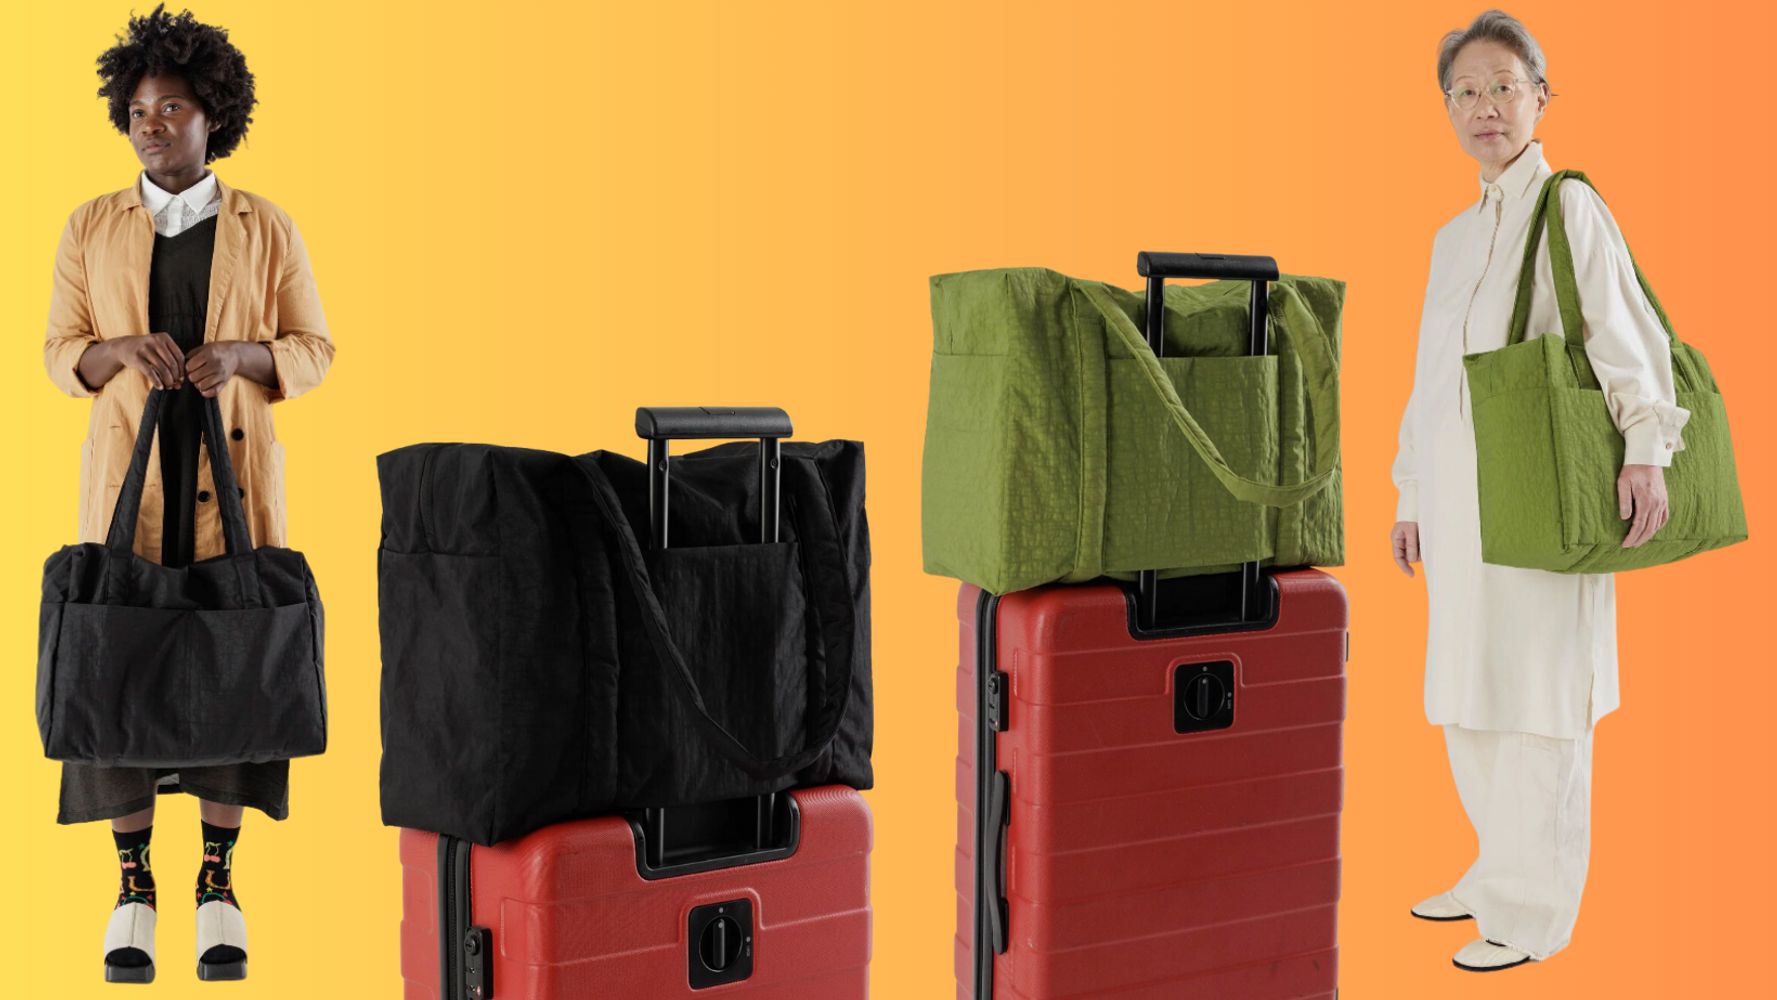 Go Travel Light Tote Bag-Orange - Just Bags Luggage Center